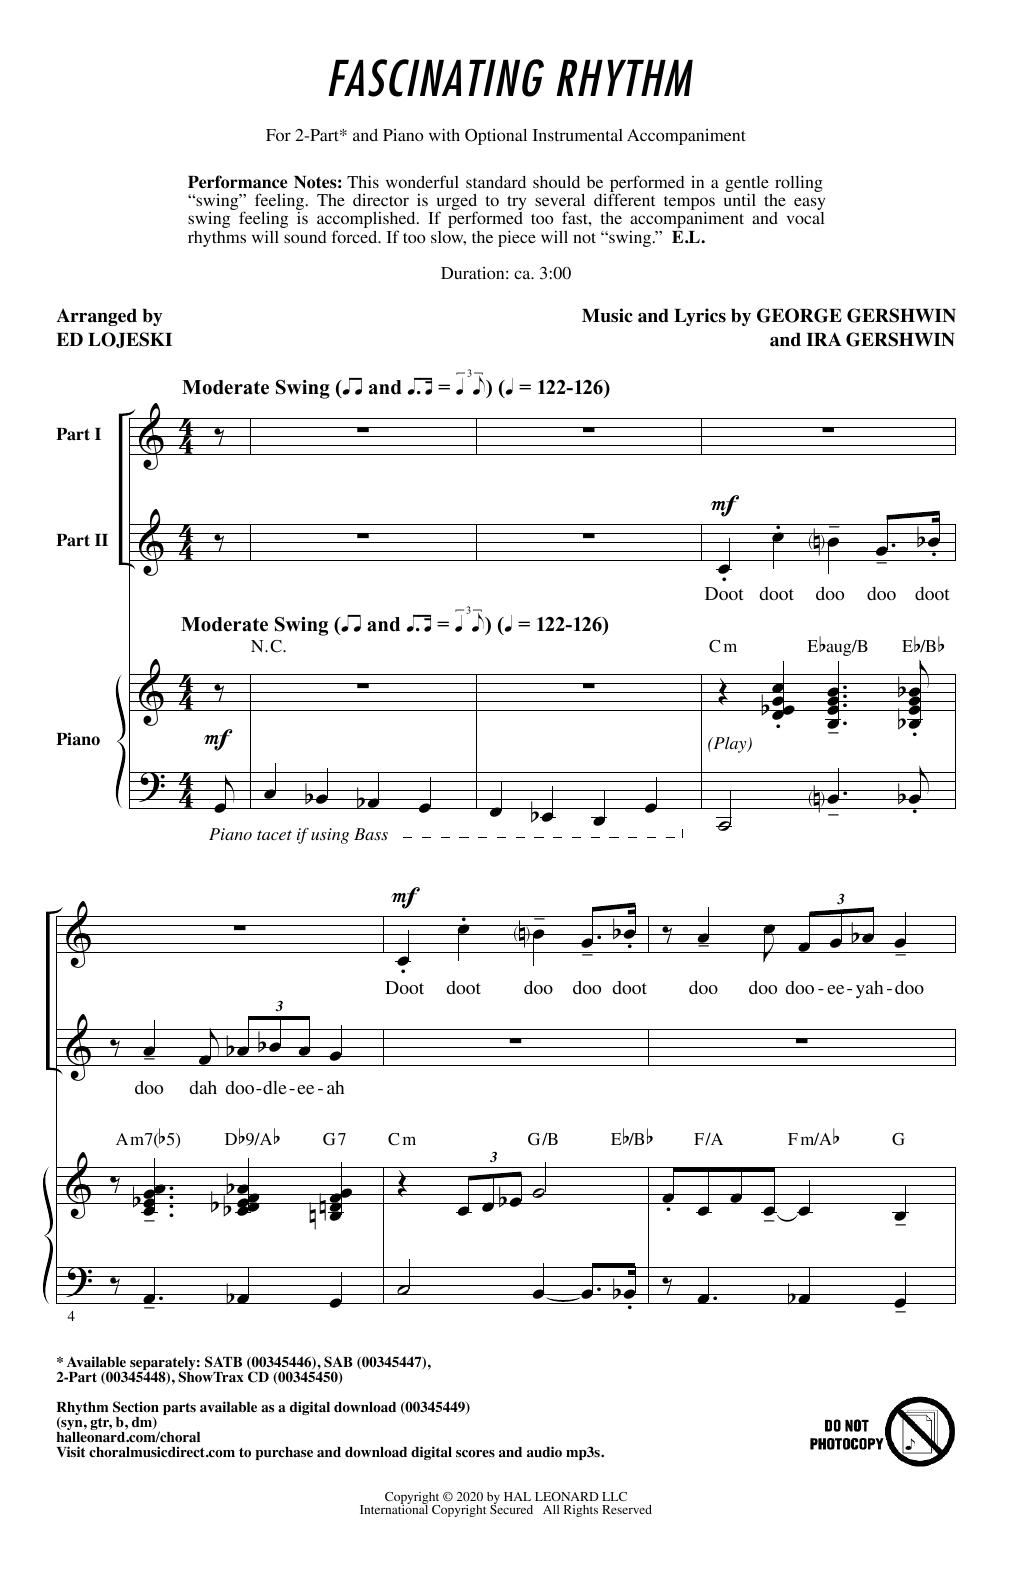 George Gershwin & Ira Gershwin Fascinating Rhythm (from Lady Be Good) (arr. Ed Lojeski) Sheet Music Notes & Chords for SAB Choir - Download or Print PDF